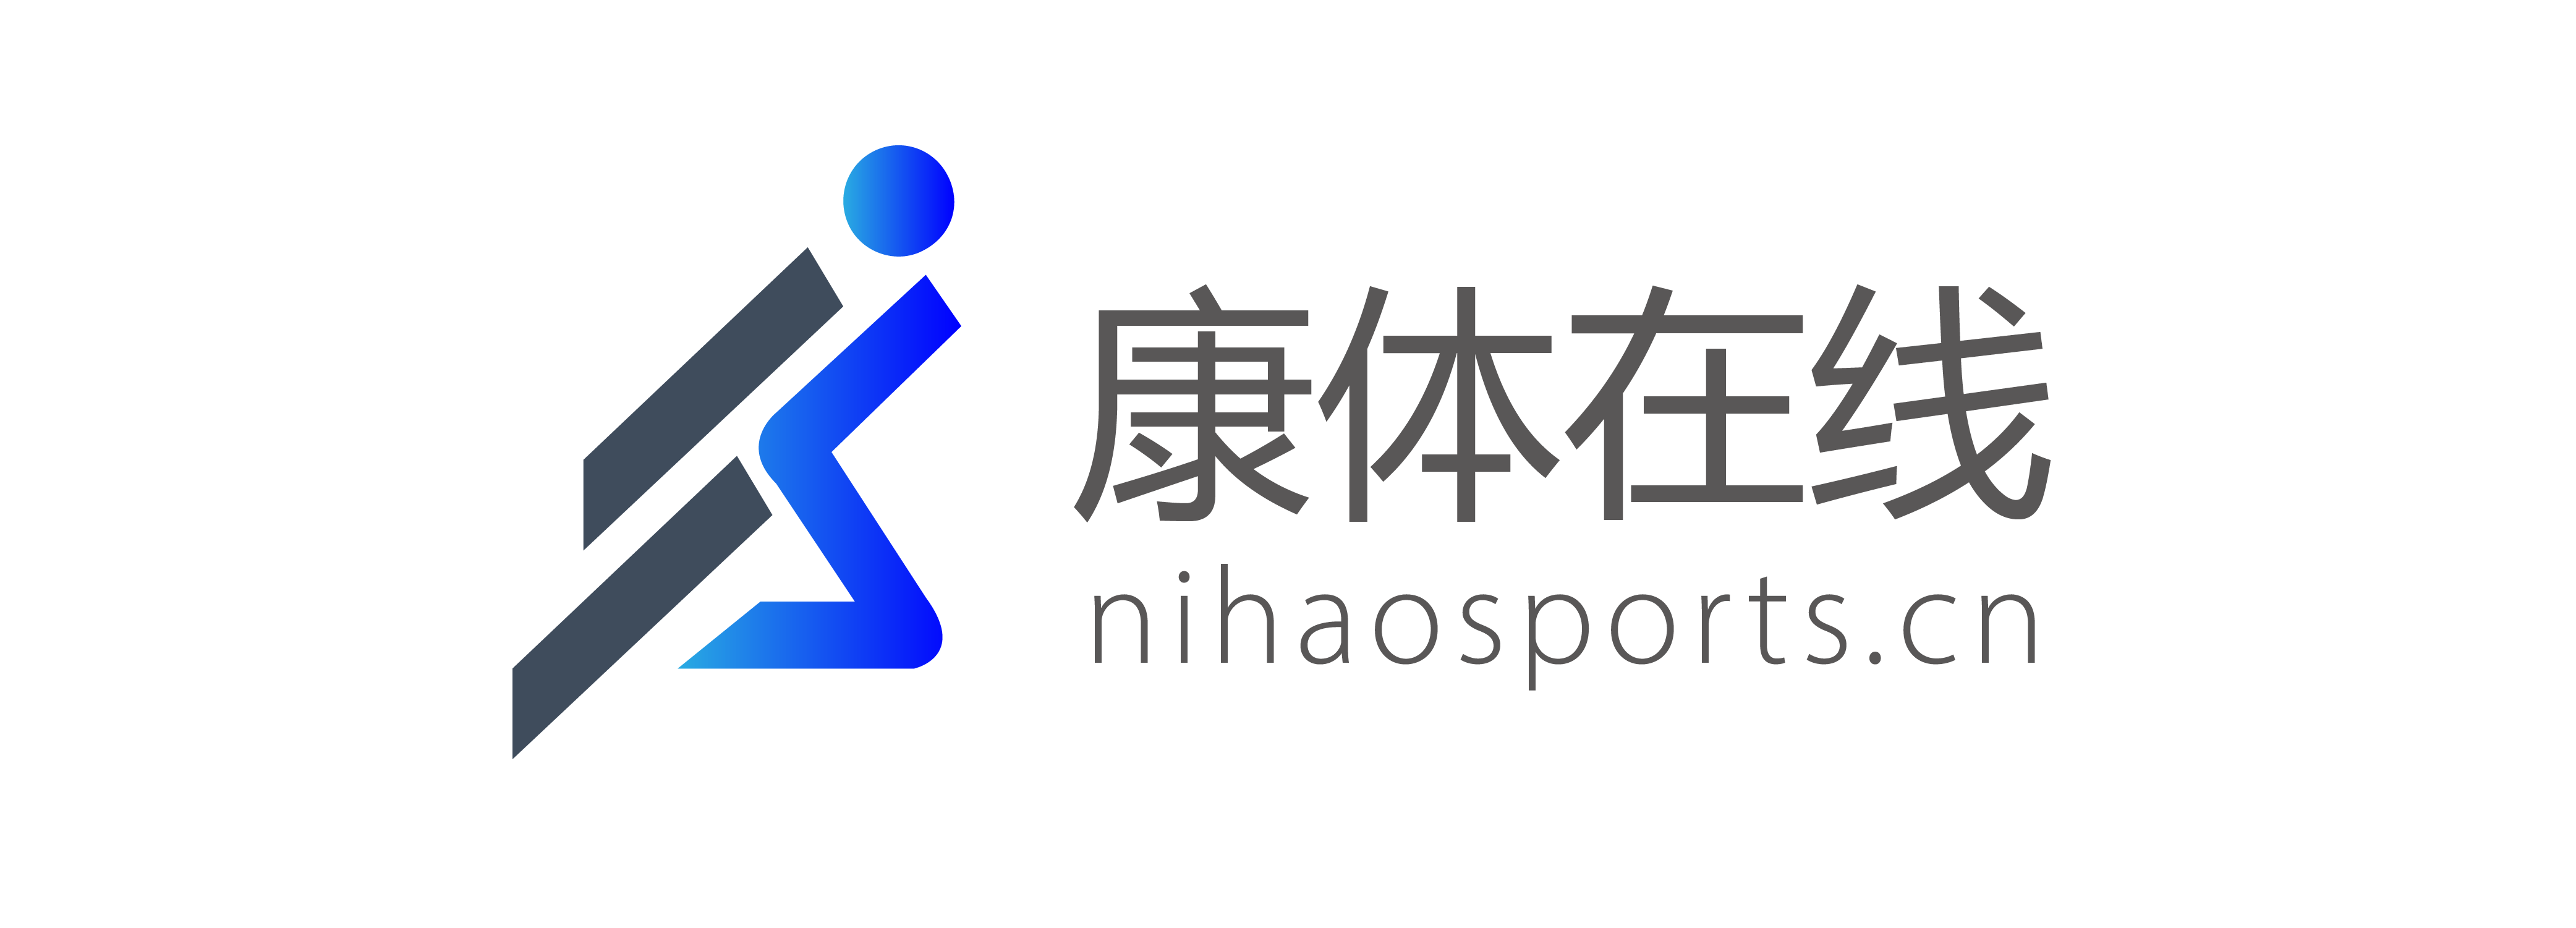 Forma de planta B2B: Nihaosports